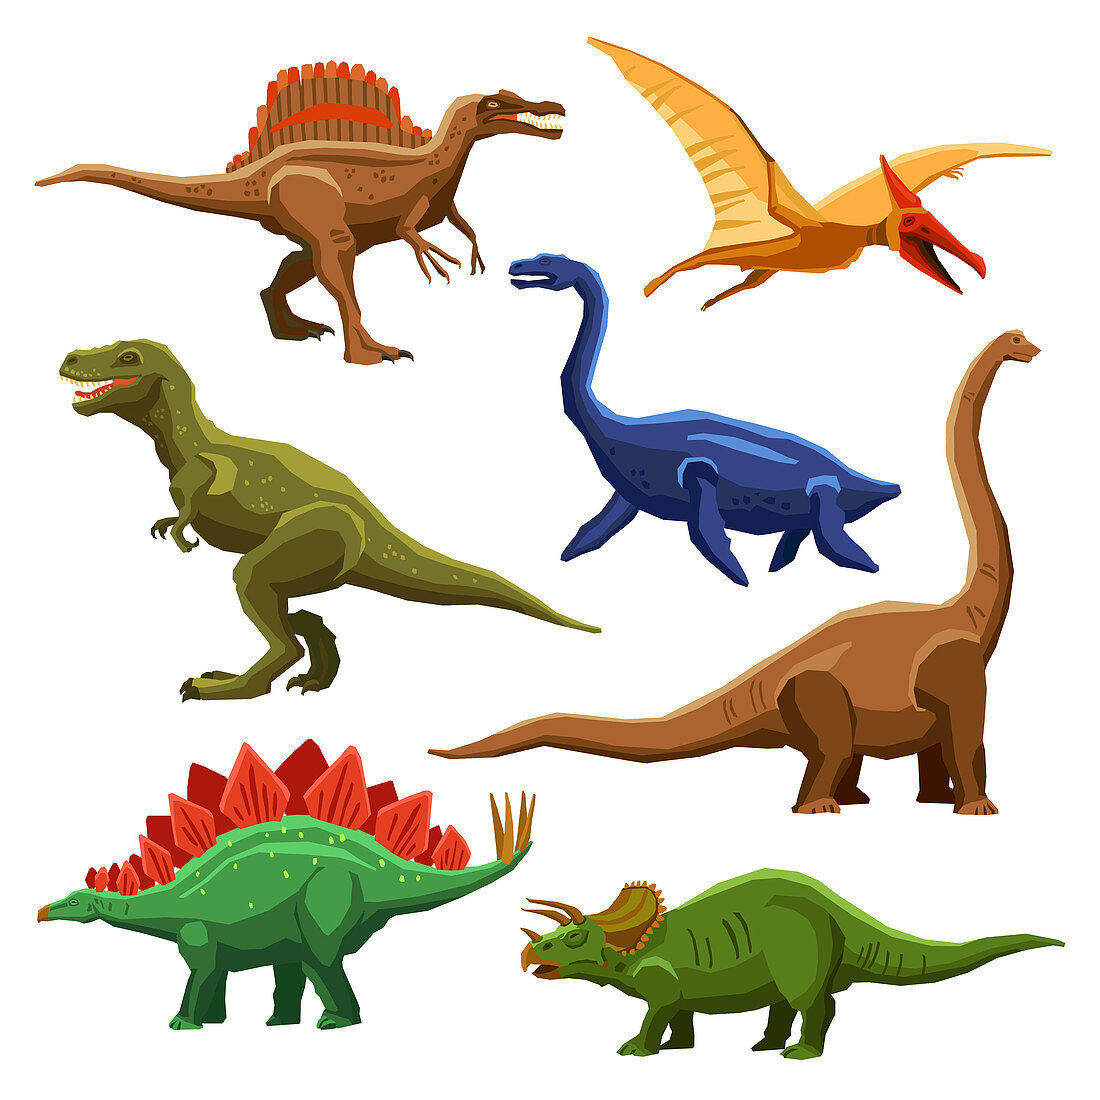 Dinosaur icons, illustration